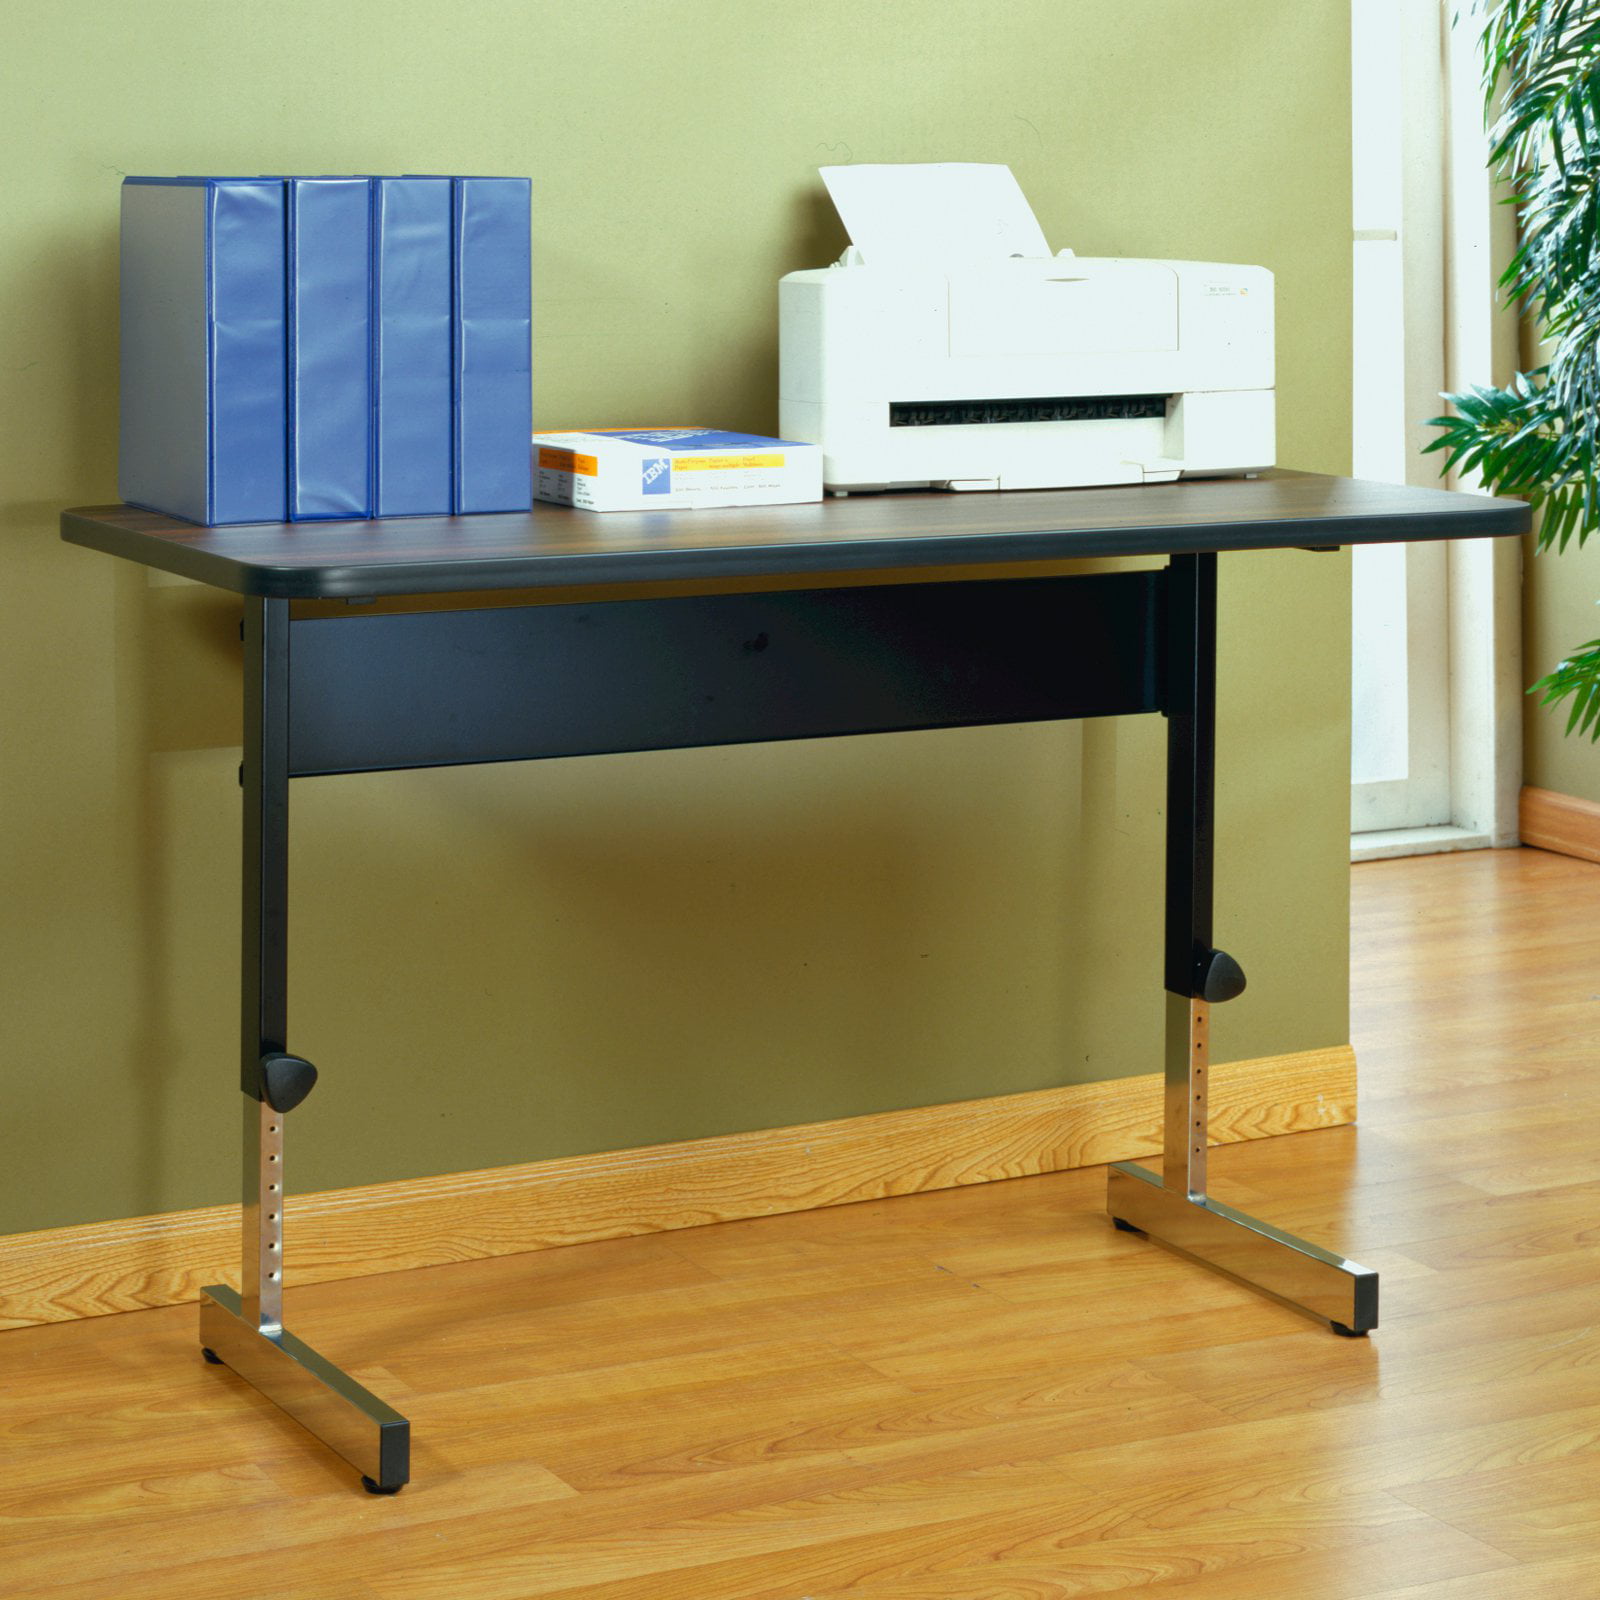 Photo 1 of (MISSING HARDWARE; DAMAGED TABLE CORNER)
Studio Designs Adapta Height Adjustable All-Purpose Utility Office Desk 47.5" W x 30" D 